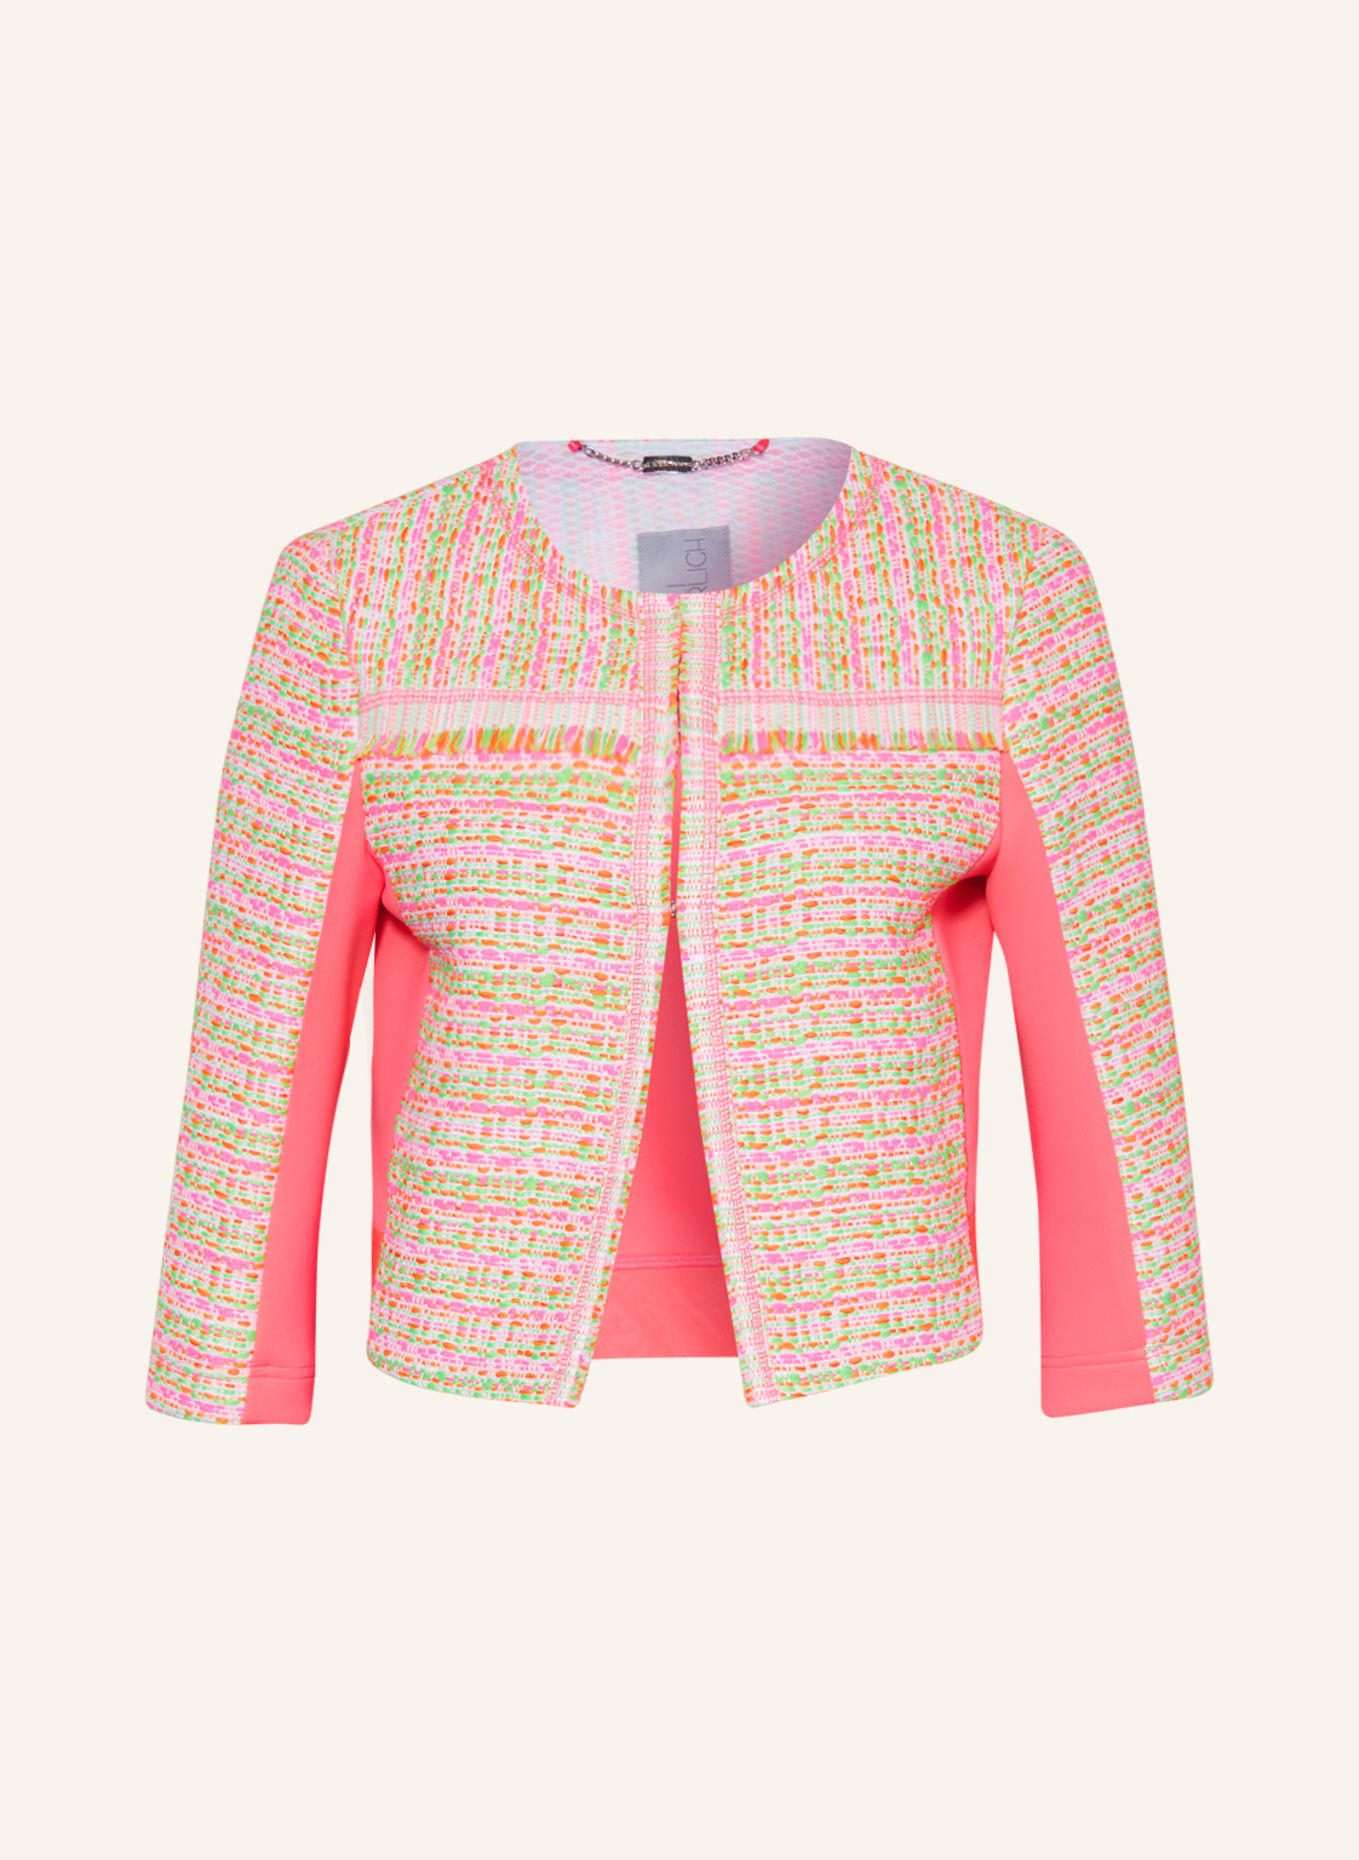 ULLI EHRLICH SPORTALM Tweed jacket in mixed materials, Color: NEON PINK/ NEON GREEN/ NEON ORANGE (Image 1)